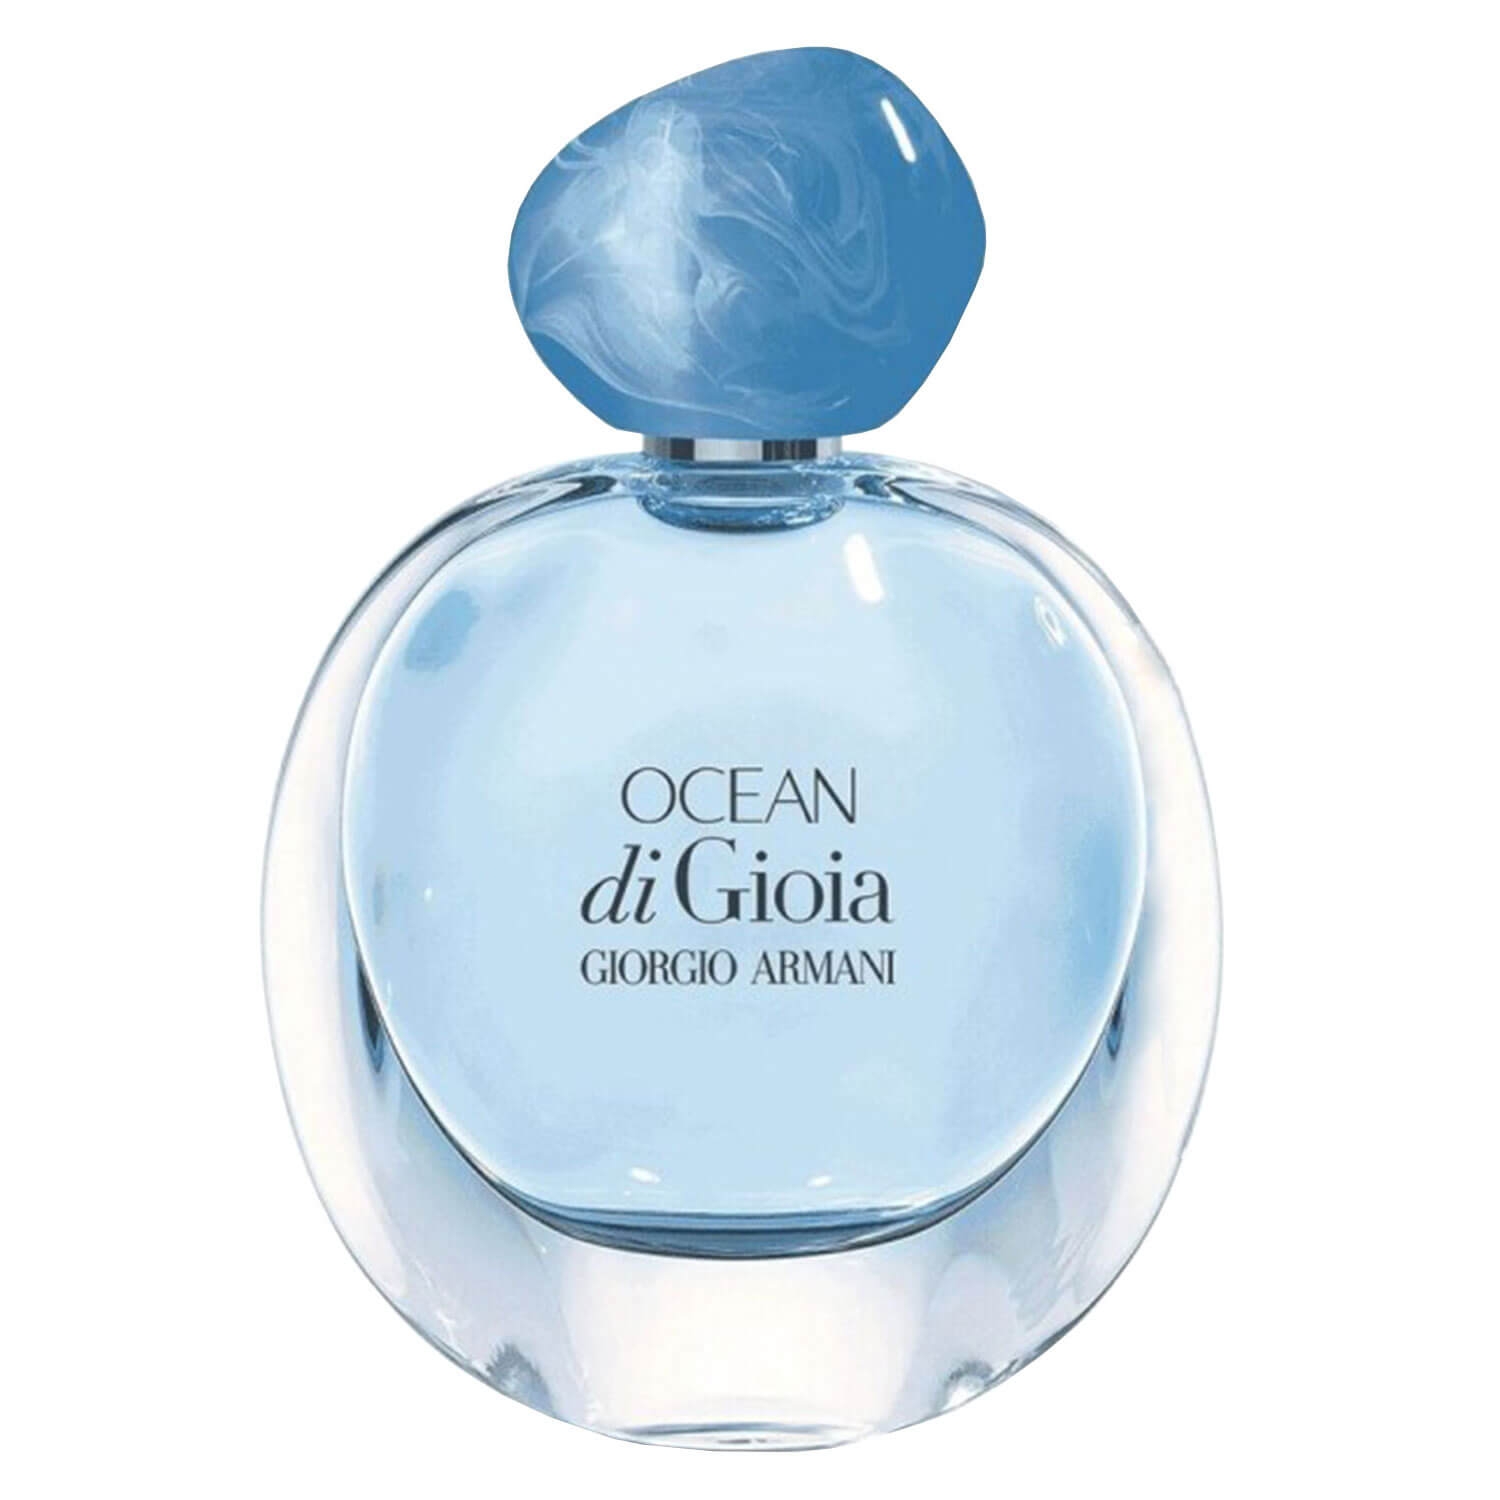 Produktbild von Gìoia - Ocean Di Gìoia Eau de Parfum